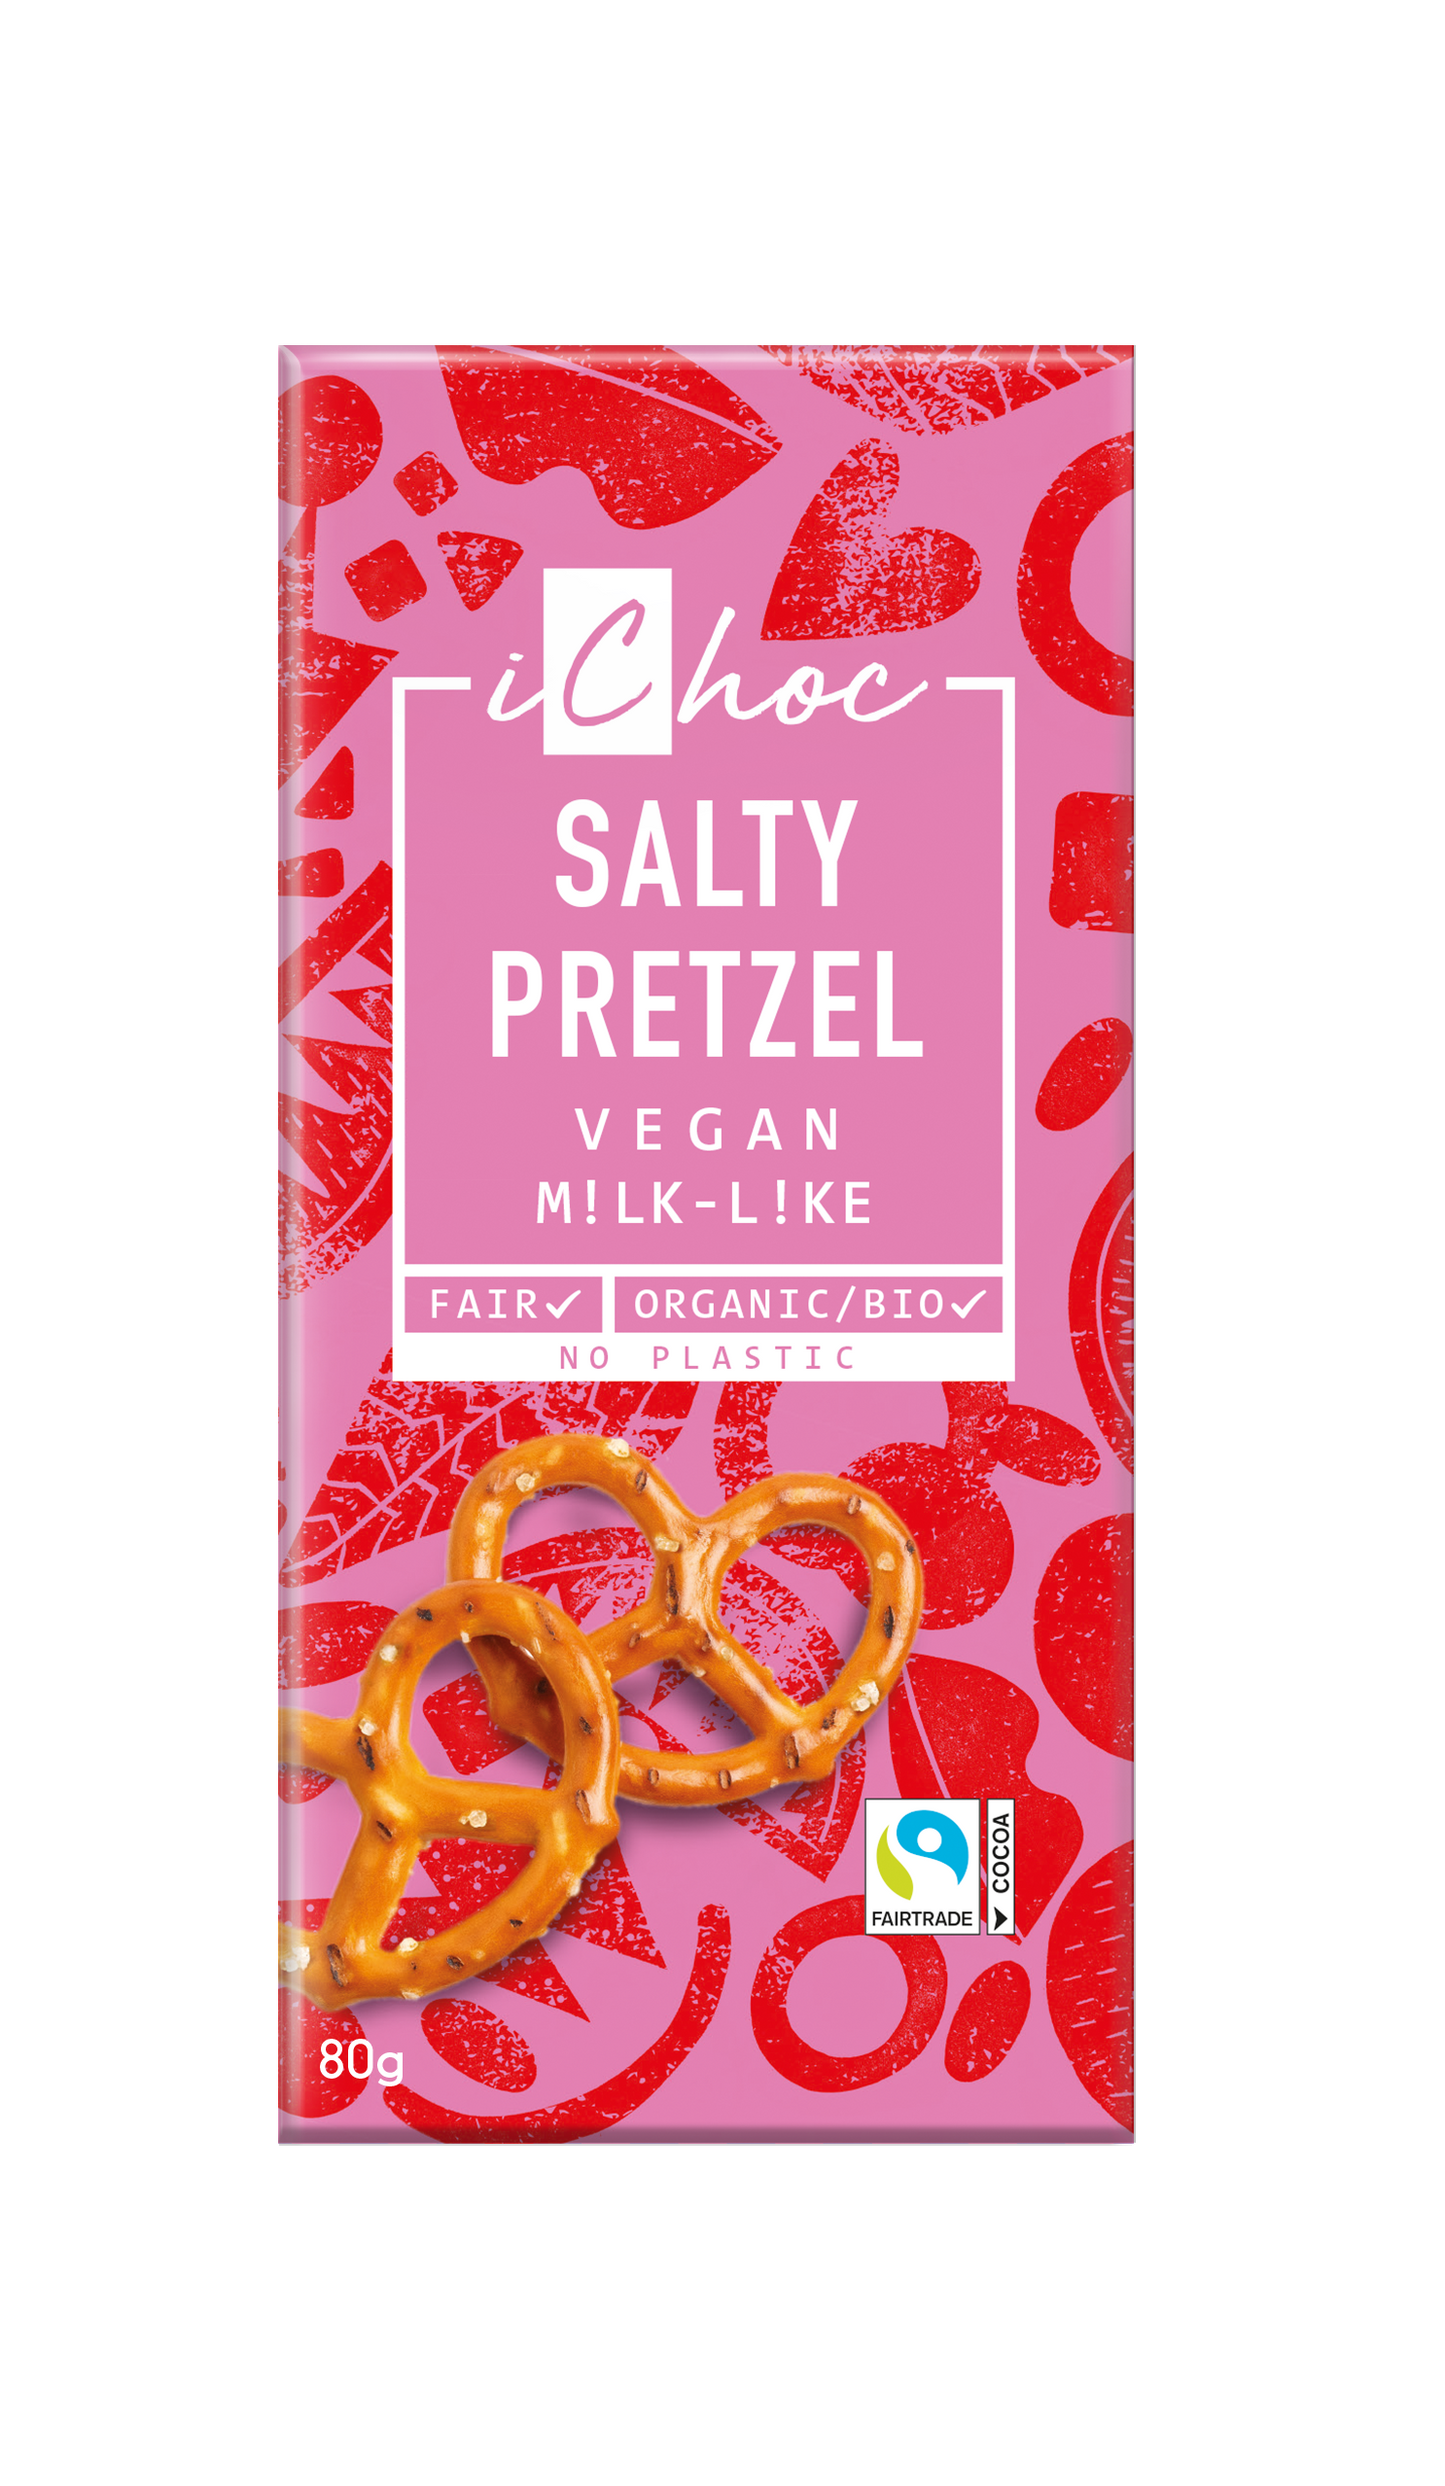 Salty Pretzel Rice Choc (Org) 48384A